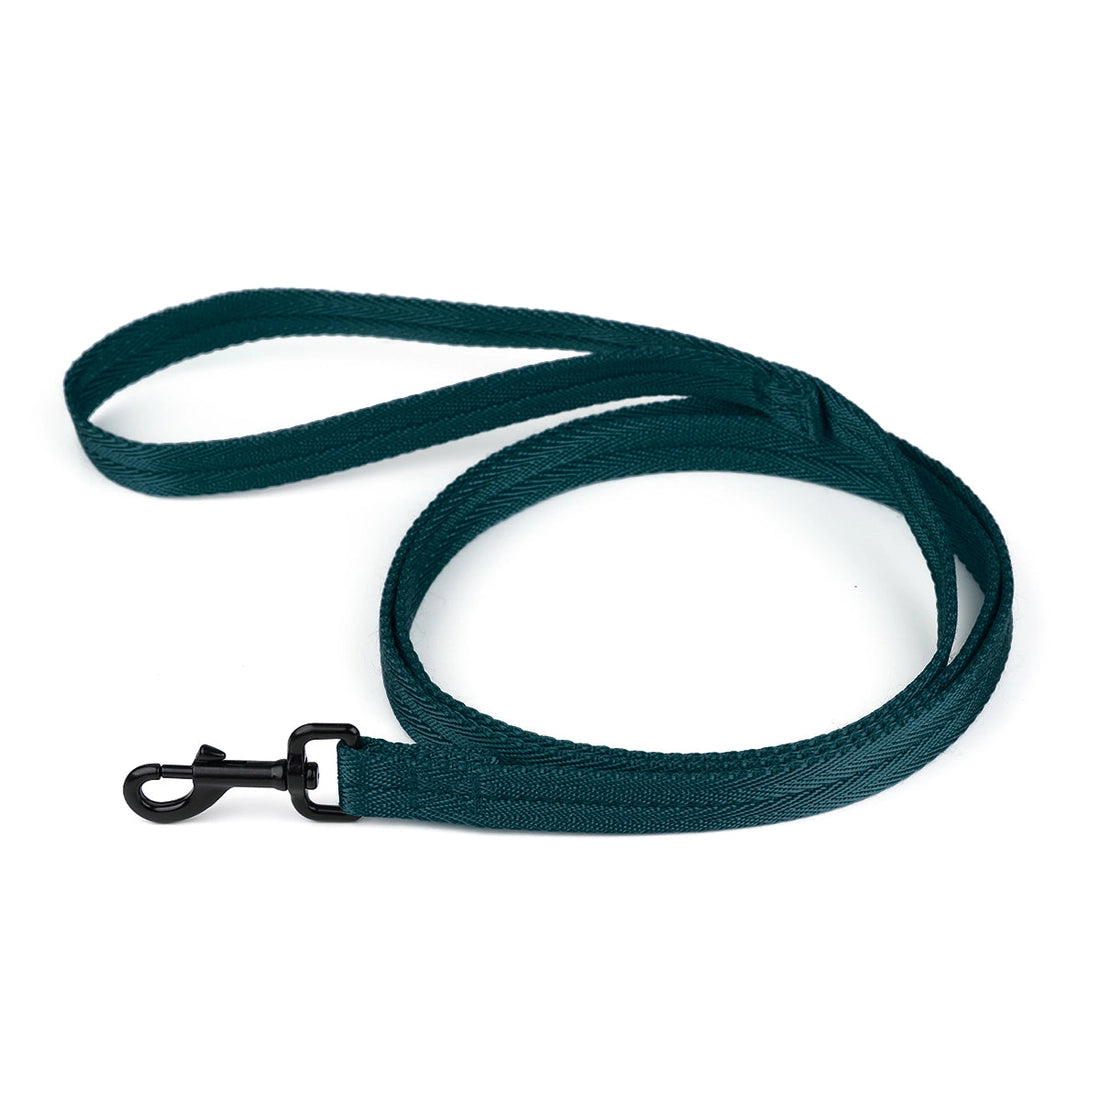 dark teal nylon dog leash with black hardware